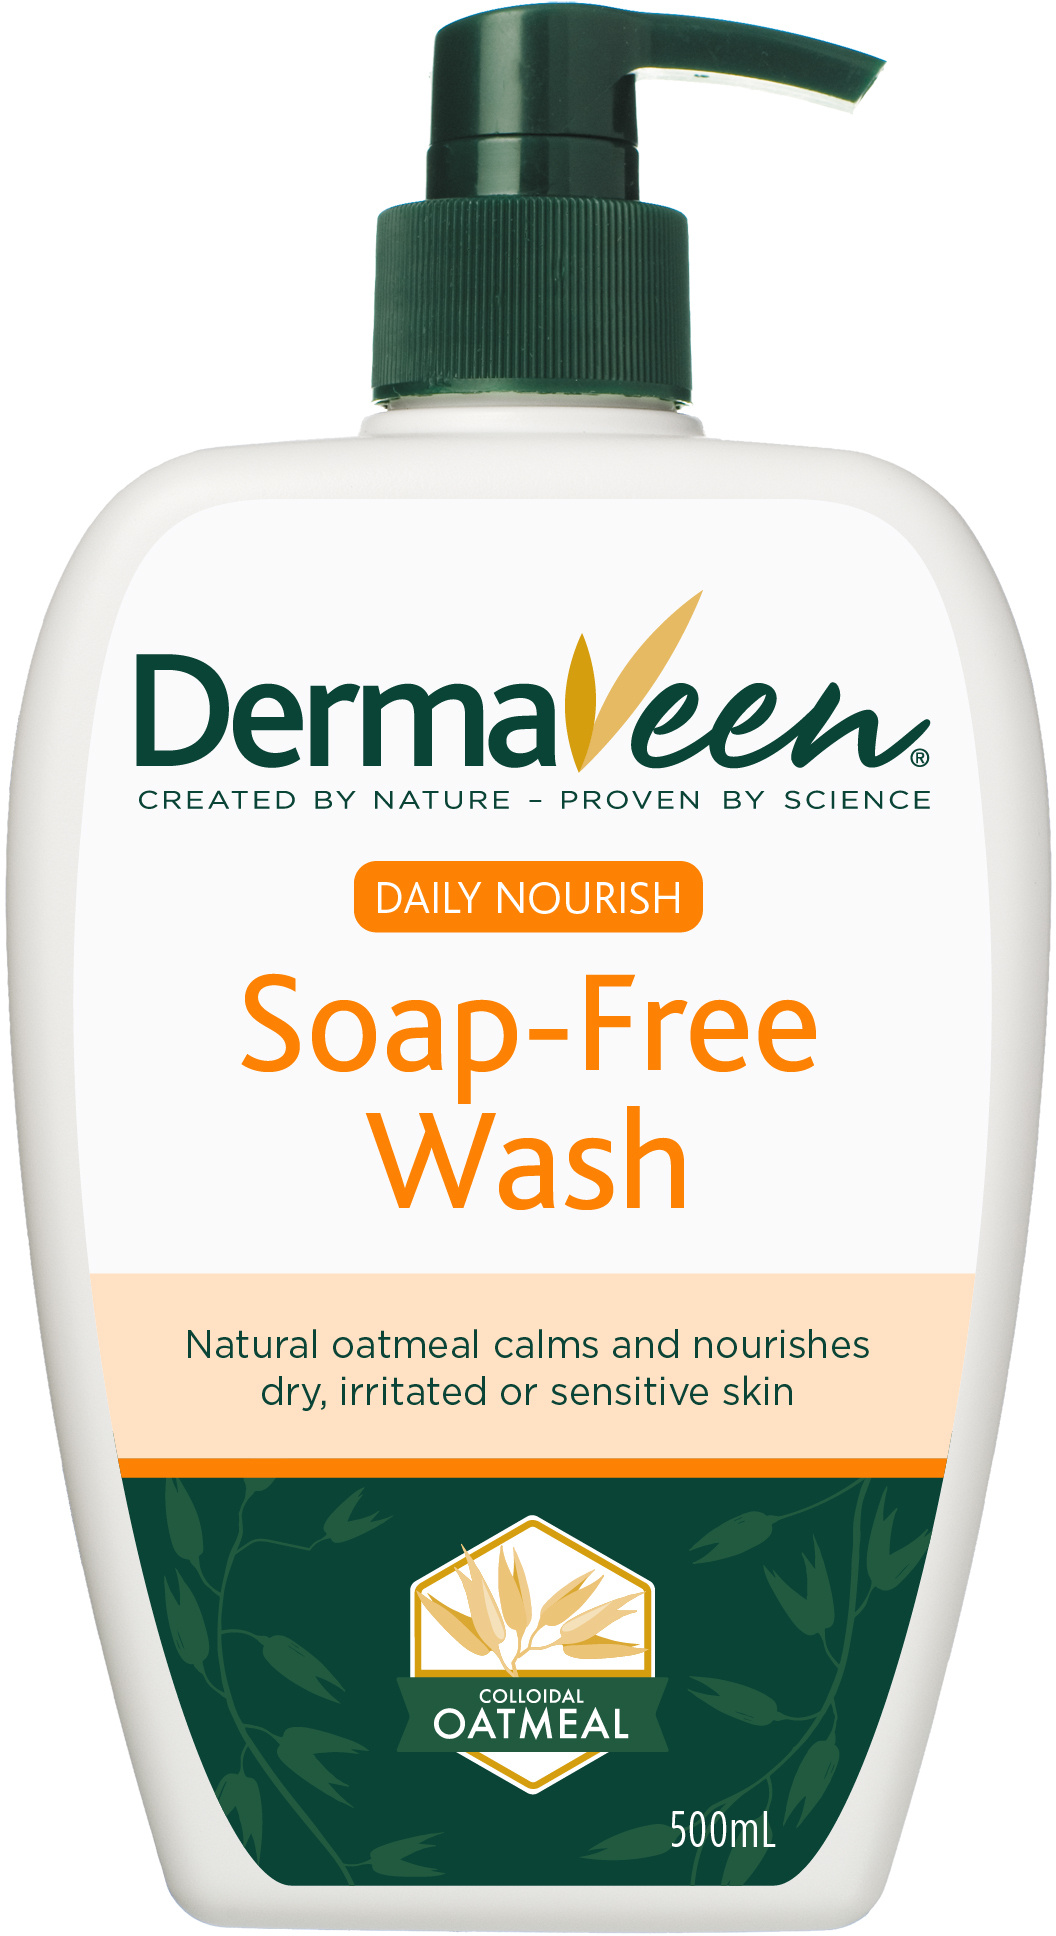 Dermaveen Soap Free Wash 500ml image 0